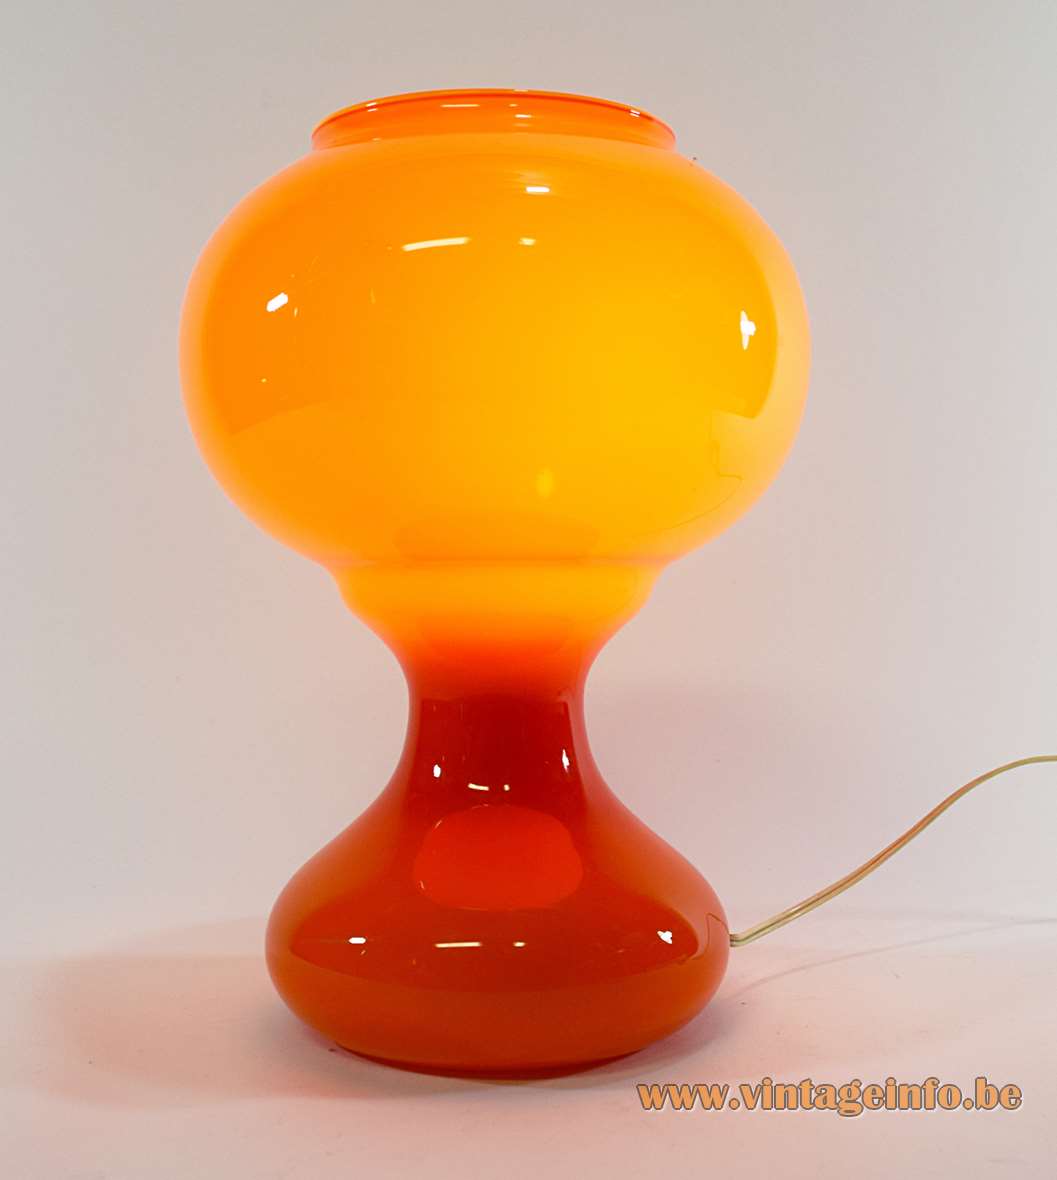 1960s orange glass table lamp curved globe Murano style lampshade Massive Belgium 1960s 1970s E27 socket